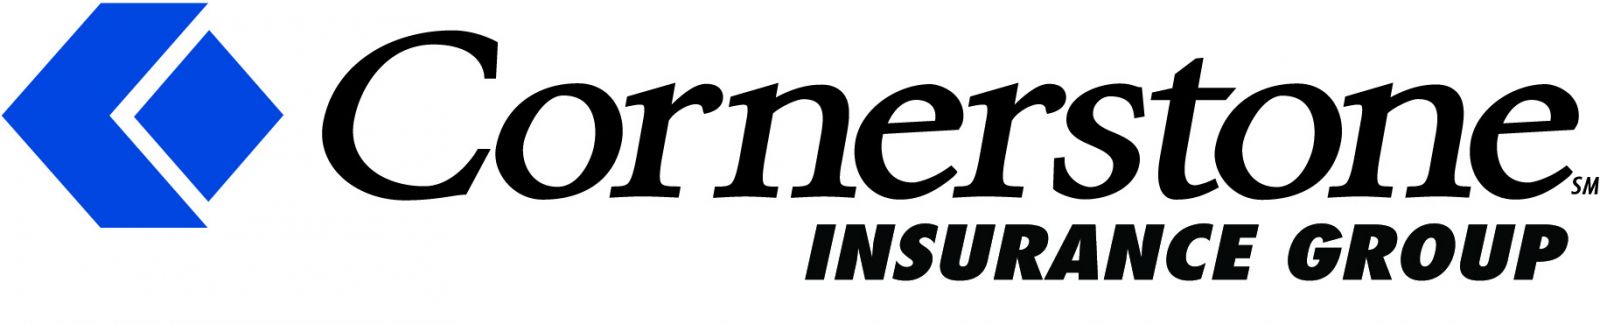 Cornerstone Insurance Group's Logo